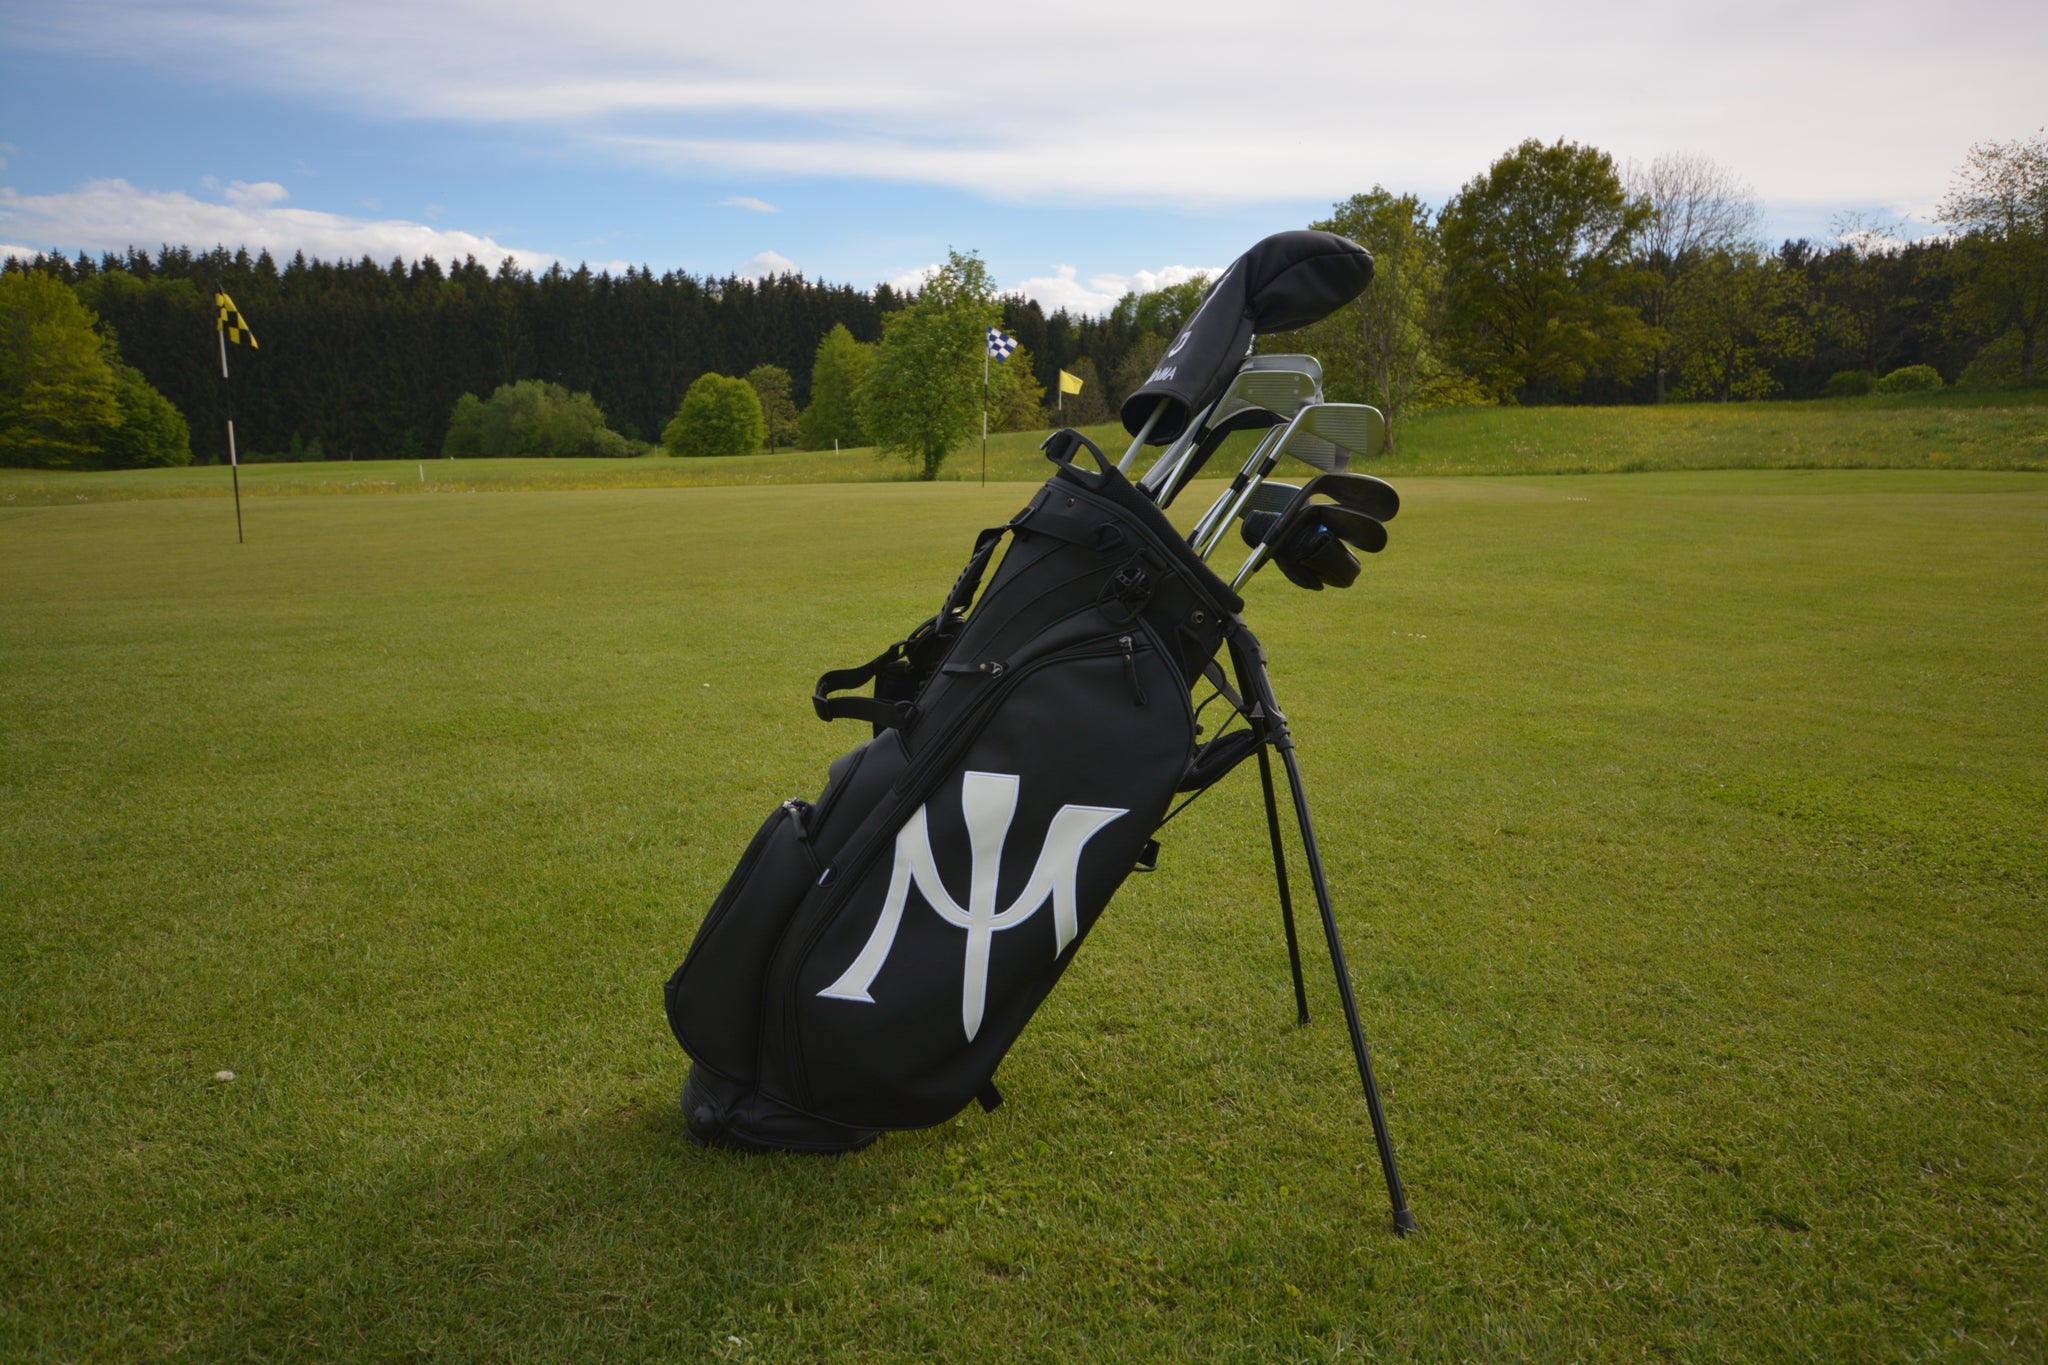 Miura Golf - Golf Bags